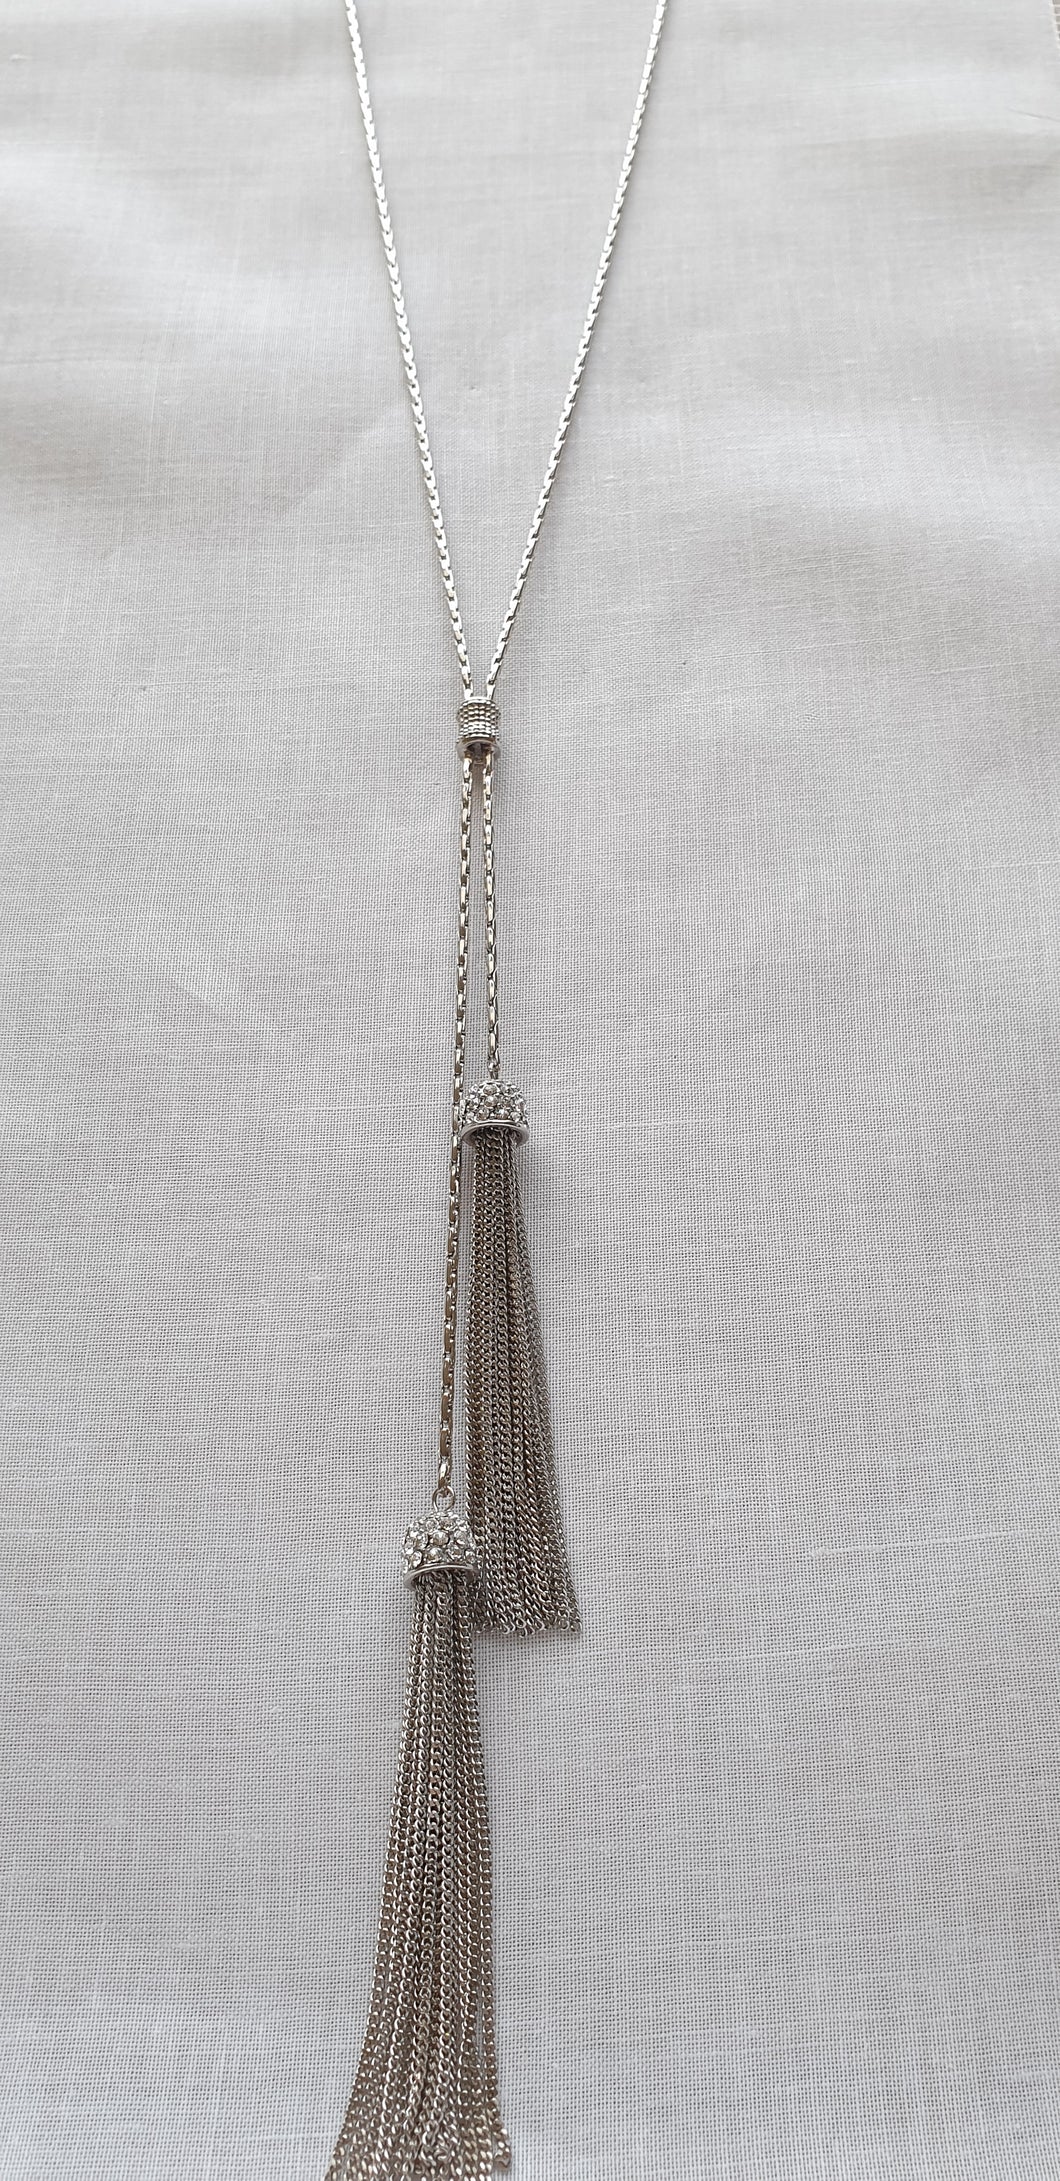 Silver tassle necklace